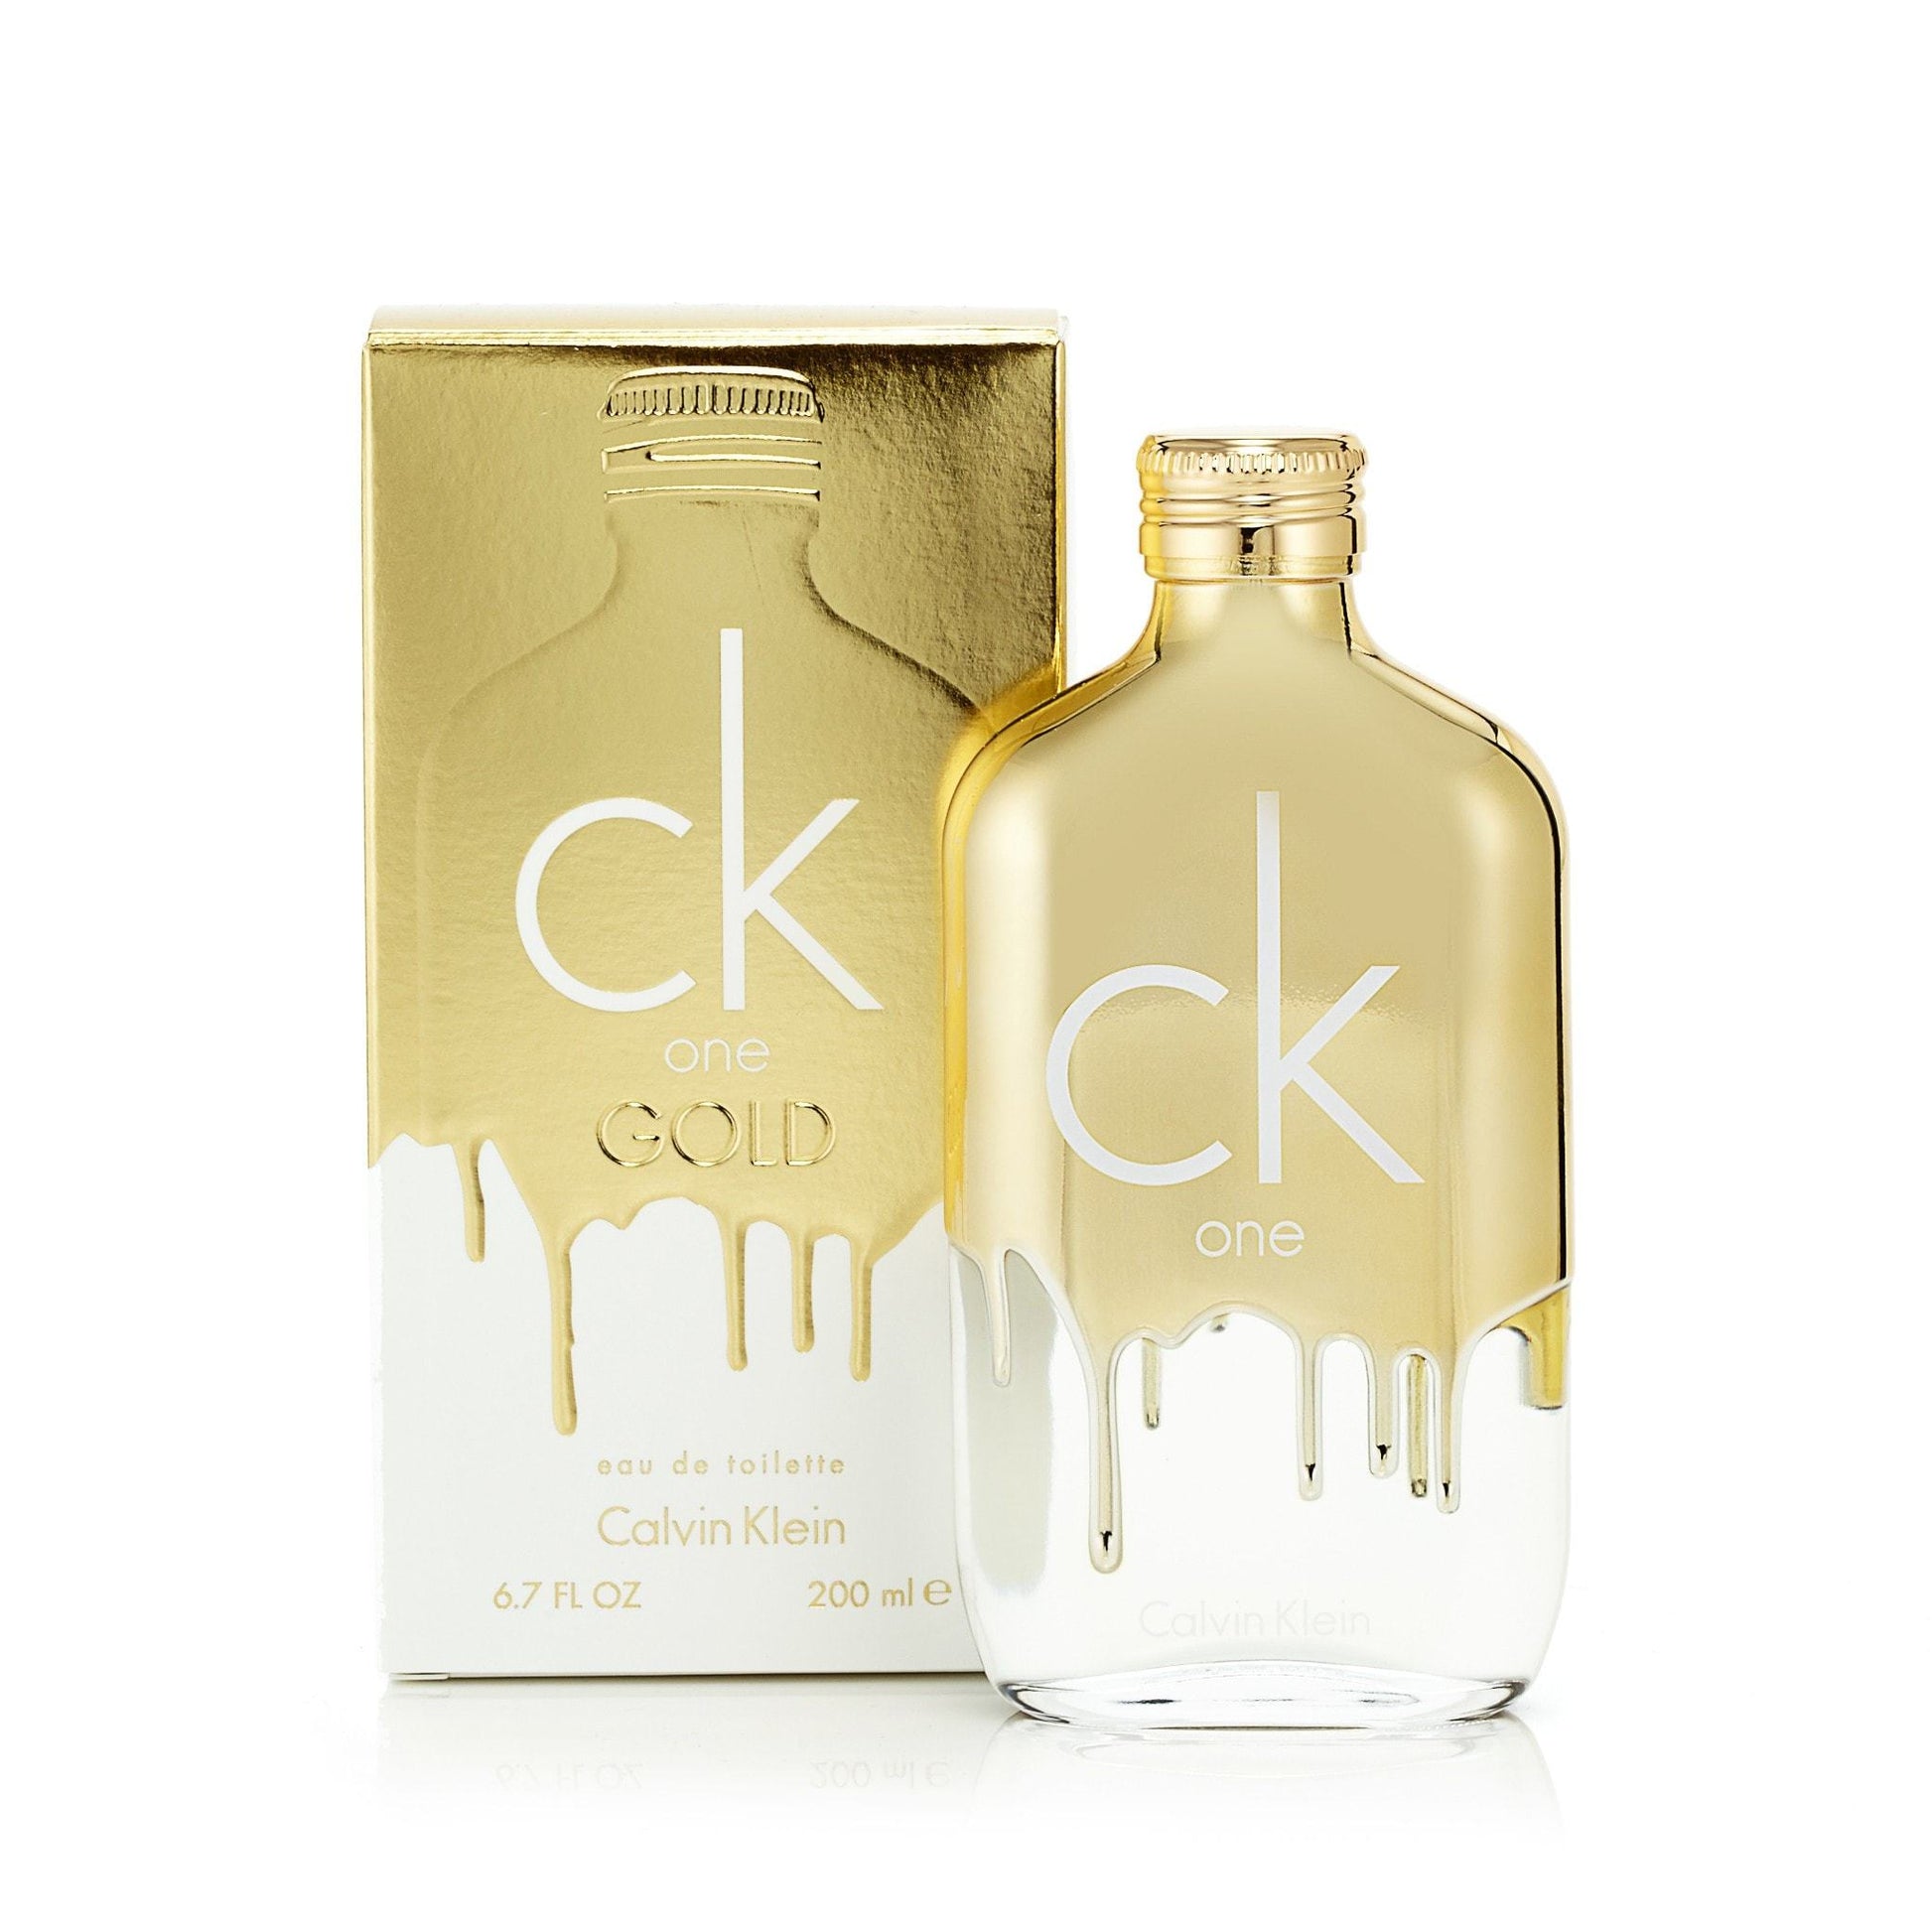 CK One Gold Eau de Toilette Spray for Women and Men by Calvin Klein, Product image 2